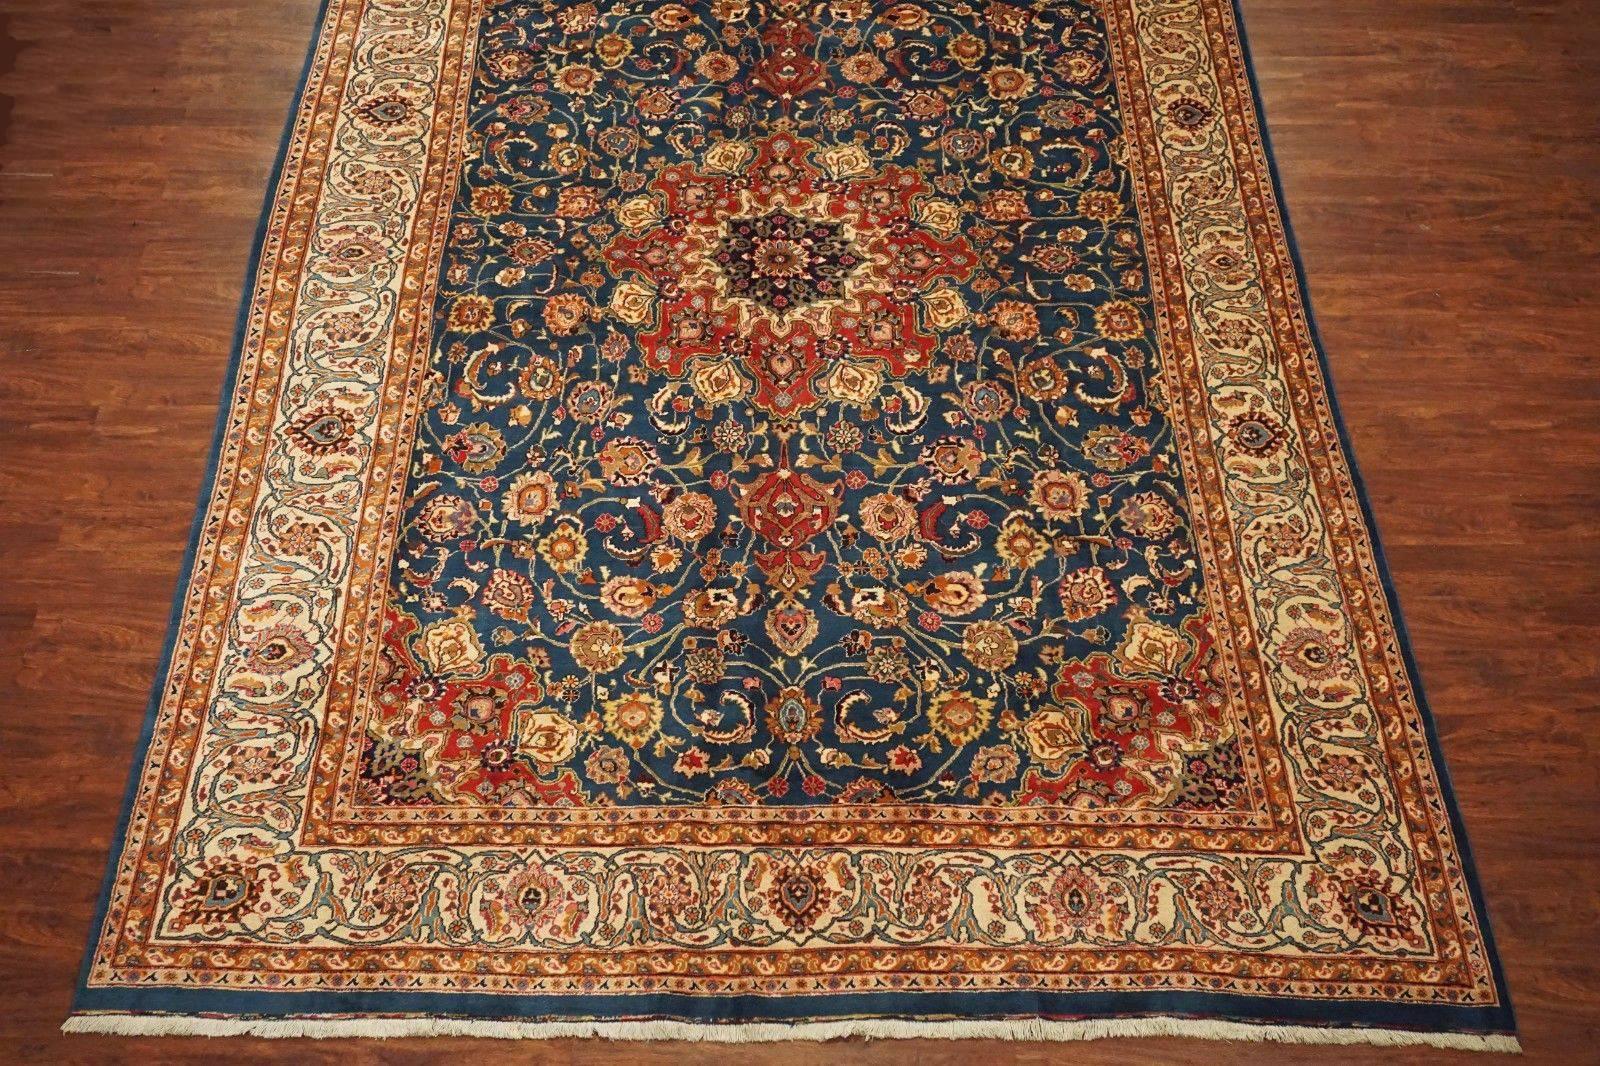 Fine Persian Isfahan area rug

circa 1960

Measures: 9' 9